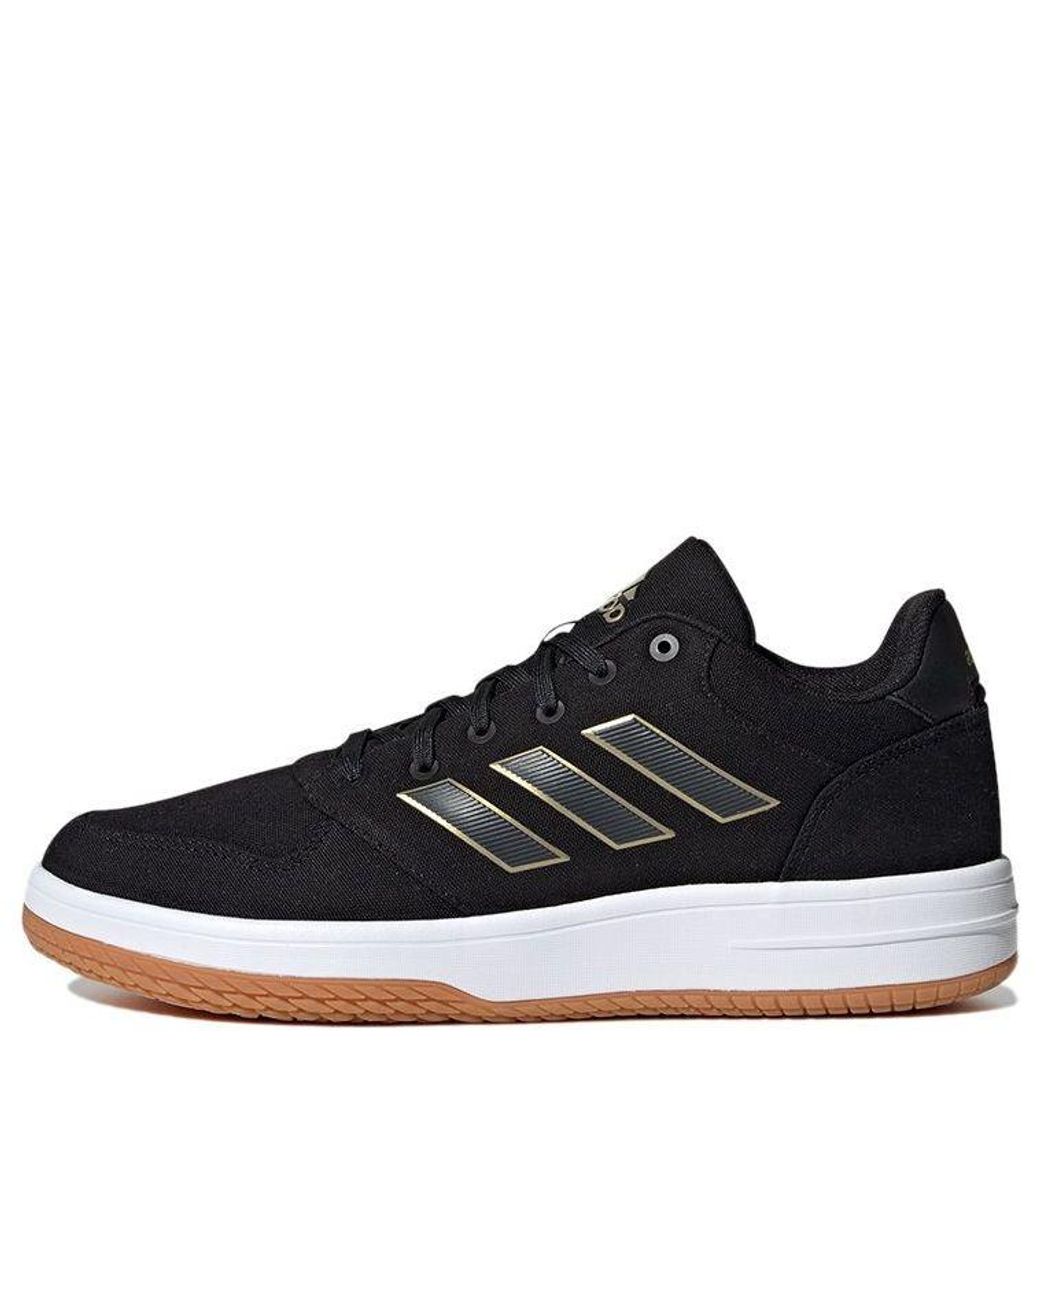 adidas Neo Gametalker Wear-resistant Non-slip Low Tops Sports Skateboarding Shoes Black for Men Lyst